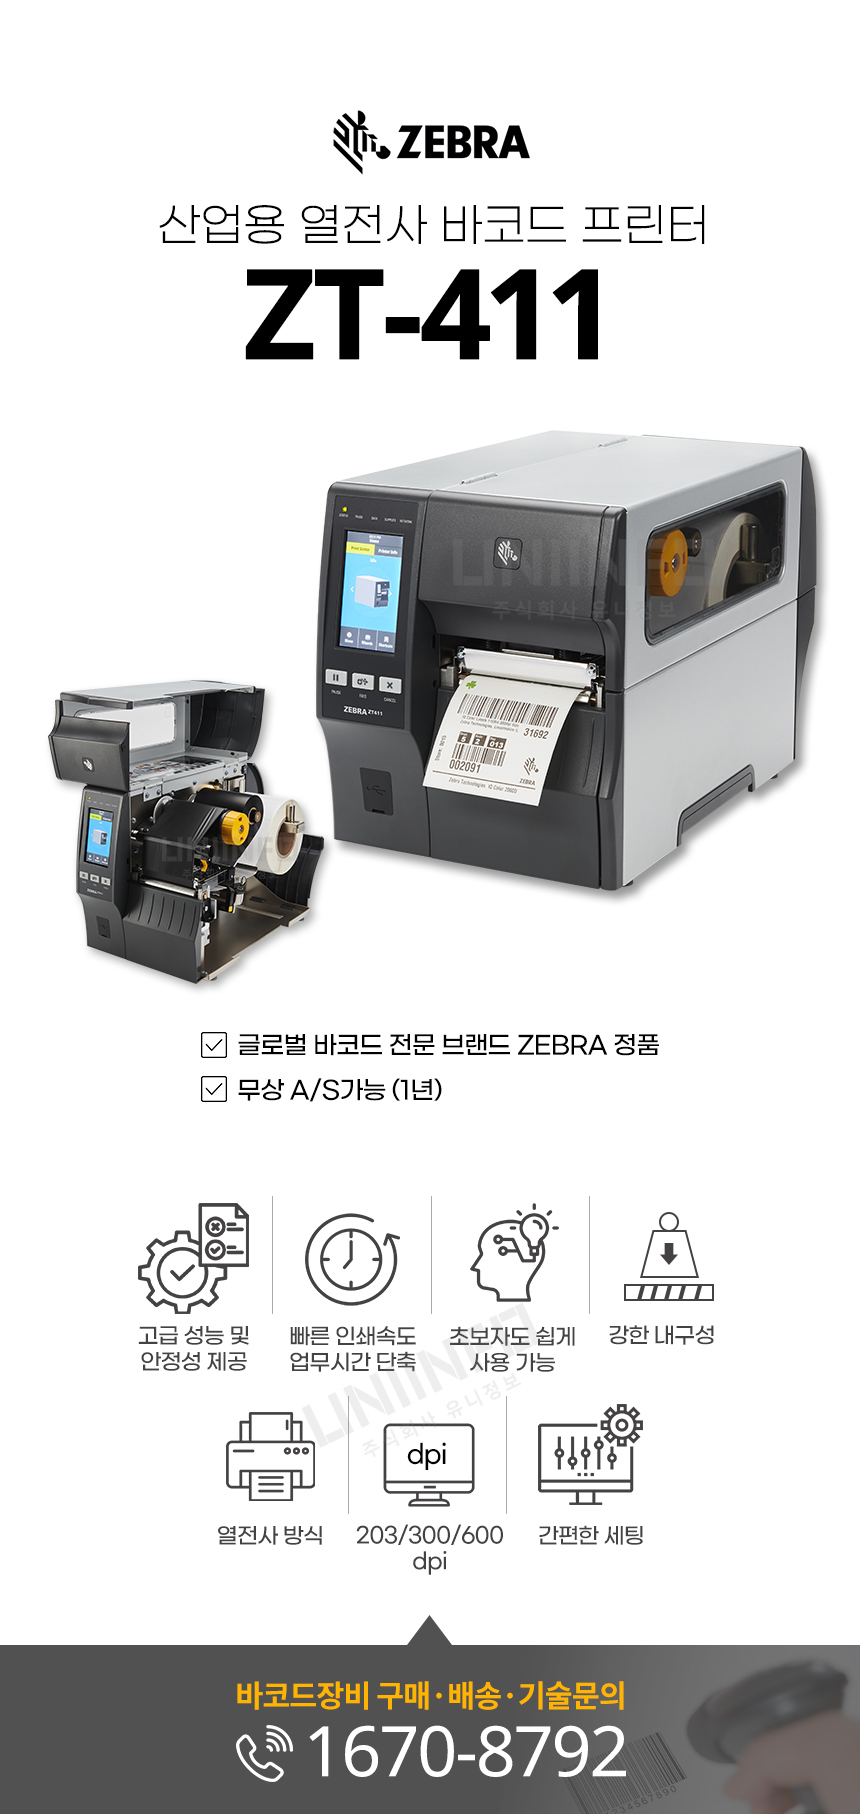 zebra 산업용 열전사 바코드 프린터 zt-411 글로벌 바코드 전문 브랜드 정품 무상 as 가능 1년 고성능 빠른 속도 내구성